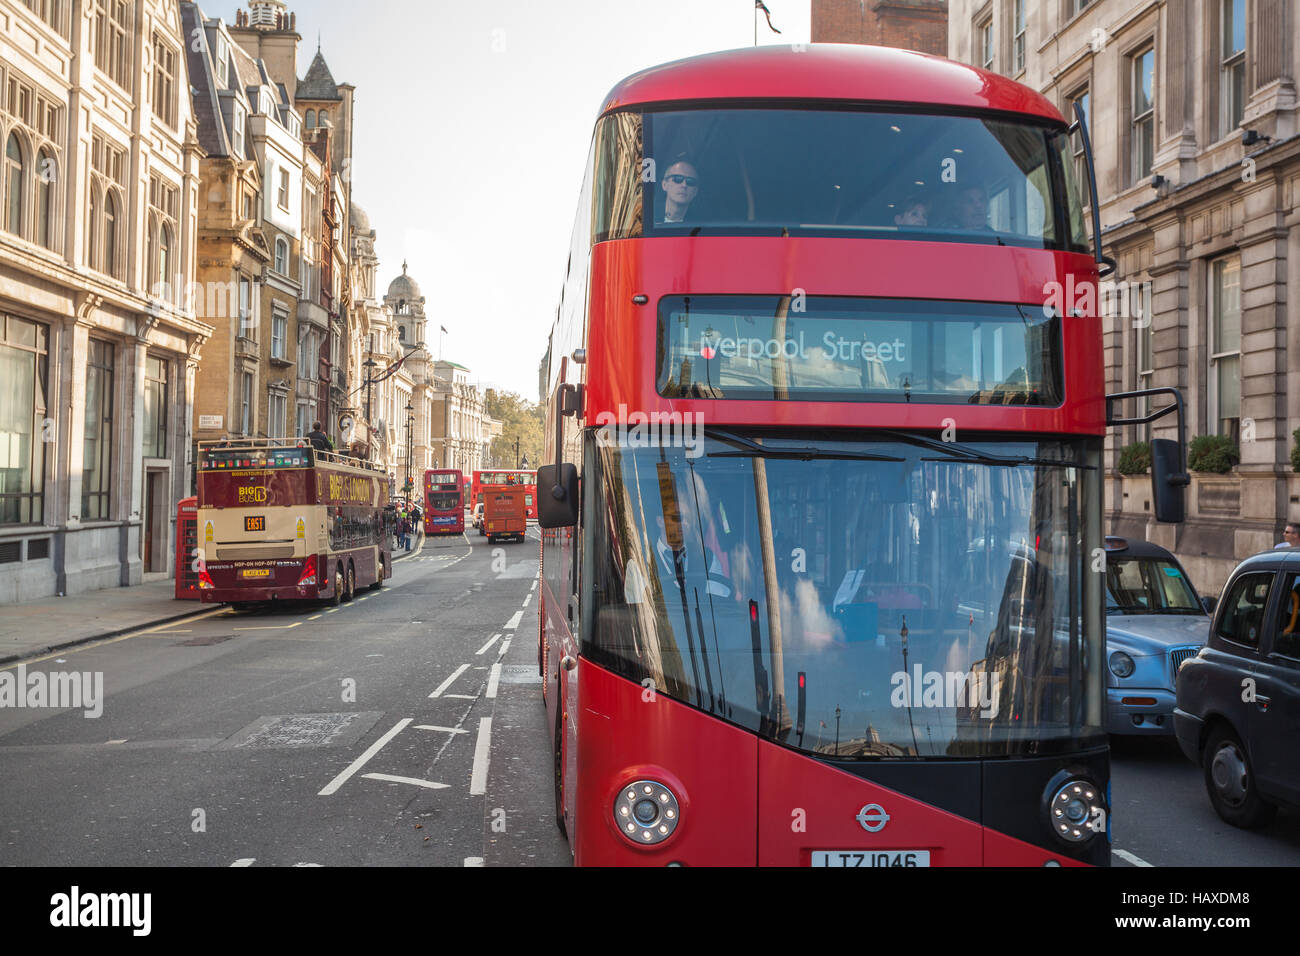 London red Bus mit Liverpool Street Schild Stockfoto